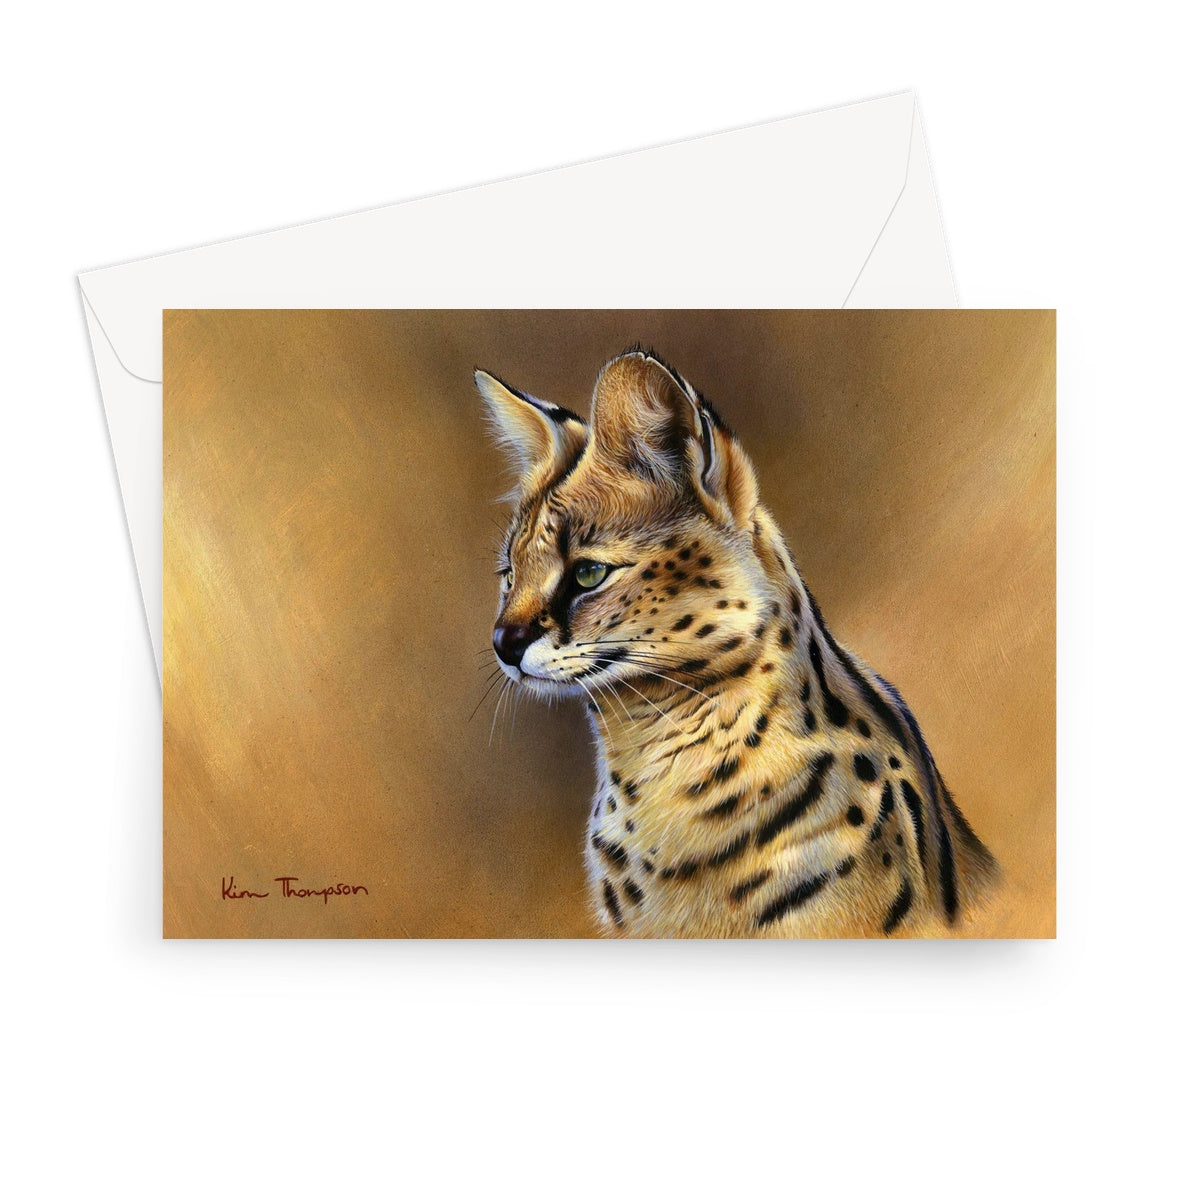 Serval Greeting Card